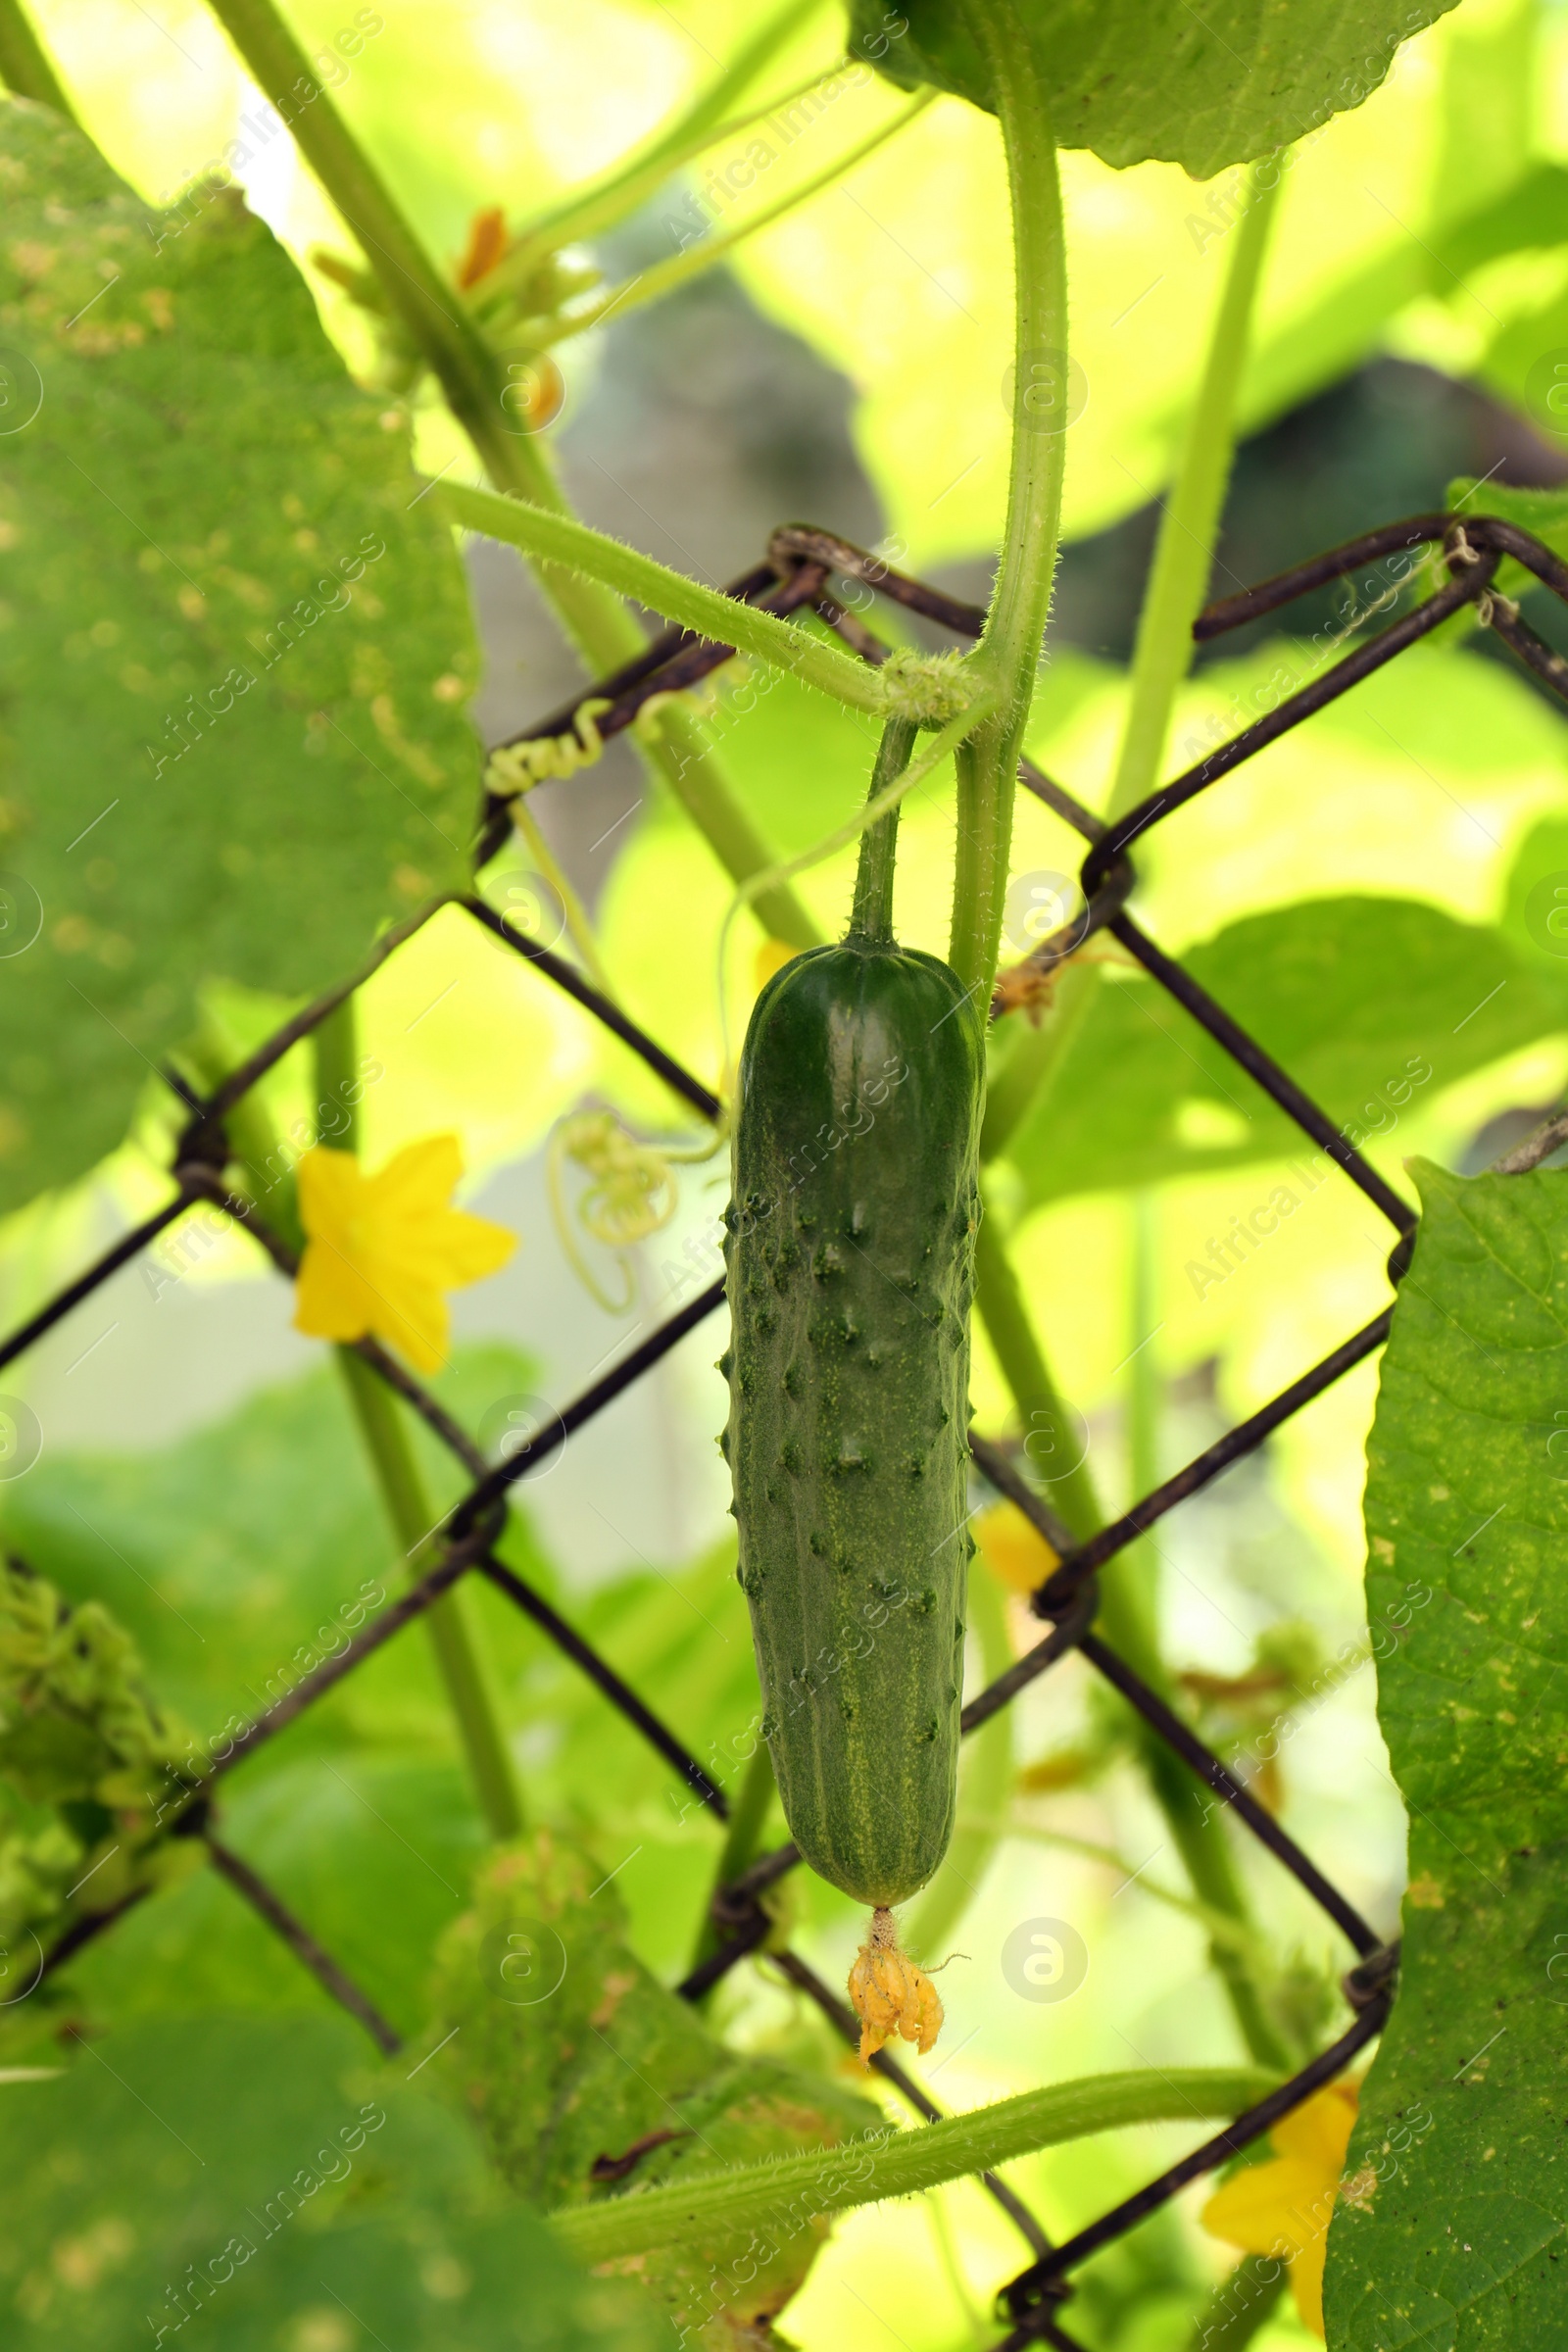 Photo of Cucumber ripening on bush near fence in garden